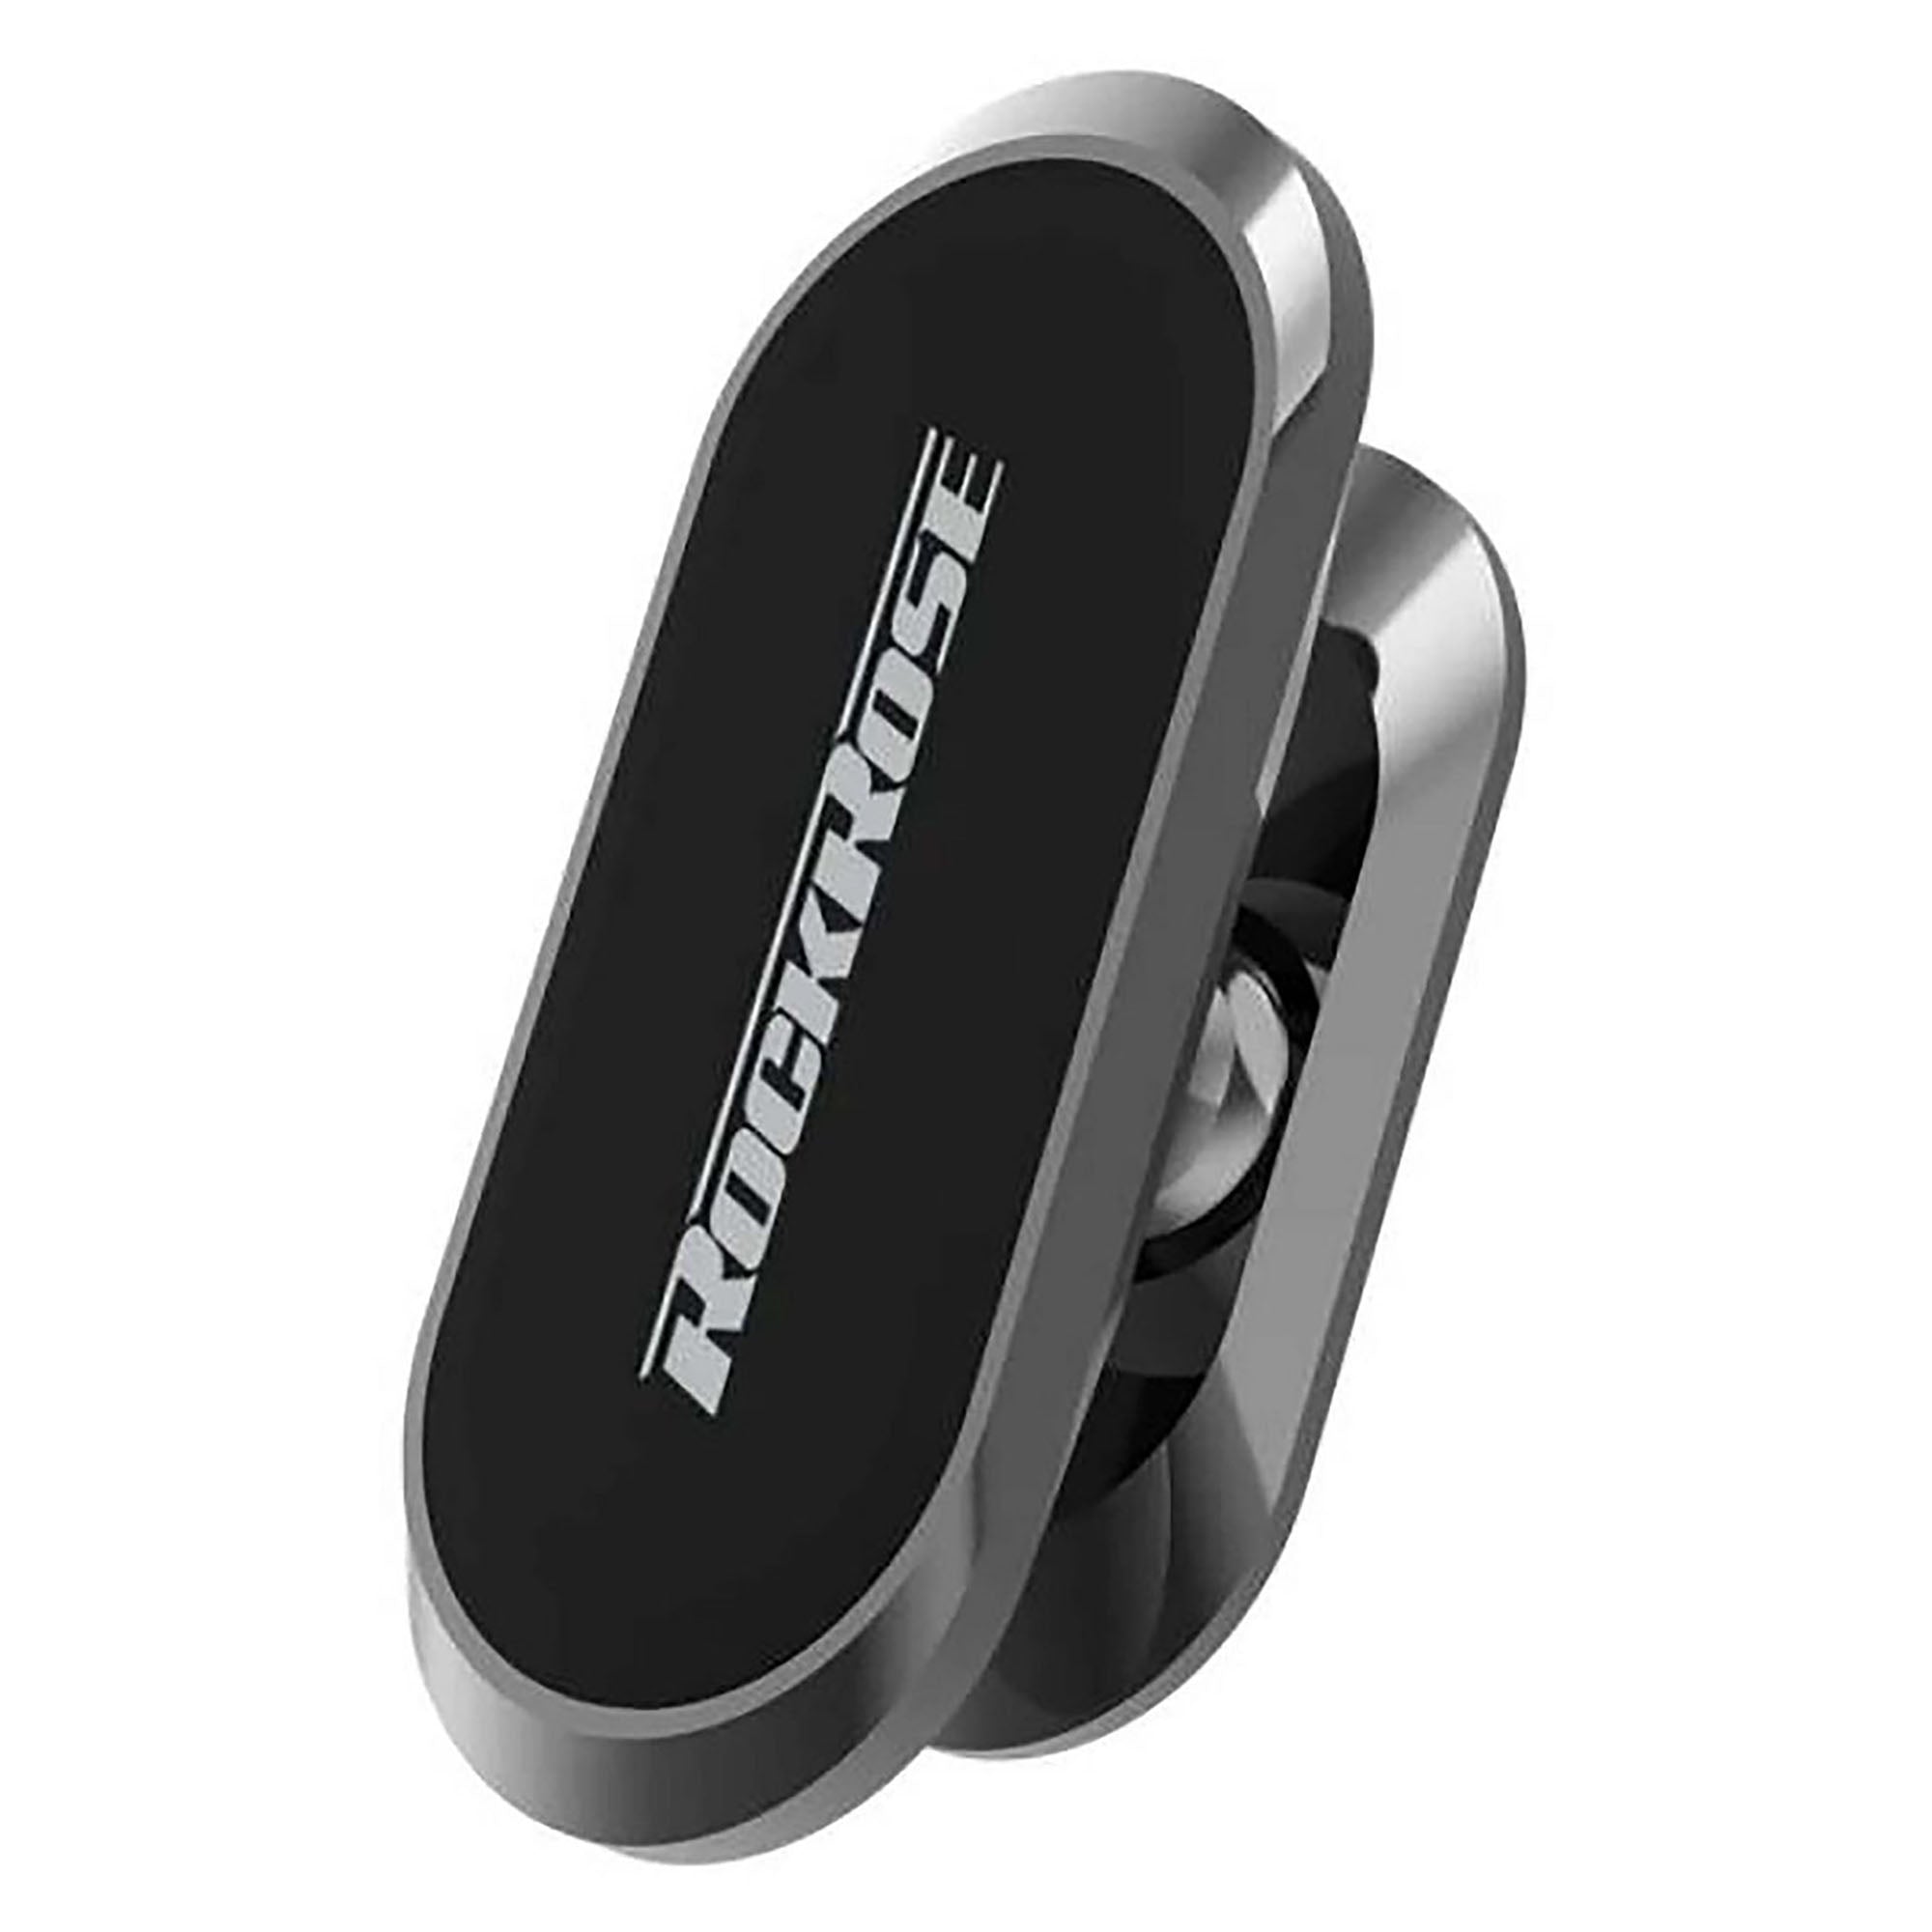 RockRose Any view Bar II Car Dashboard Mount Magnetic Phone Holder